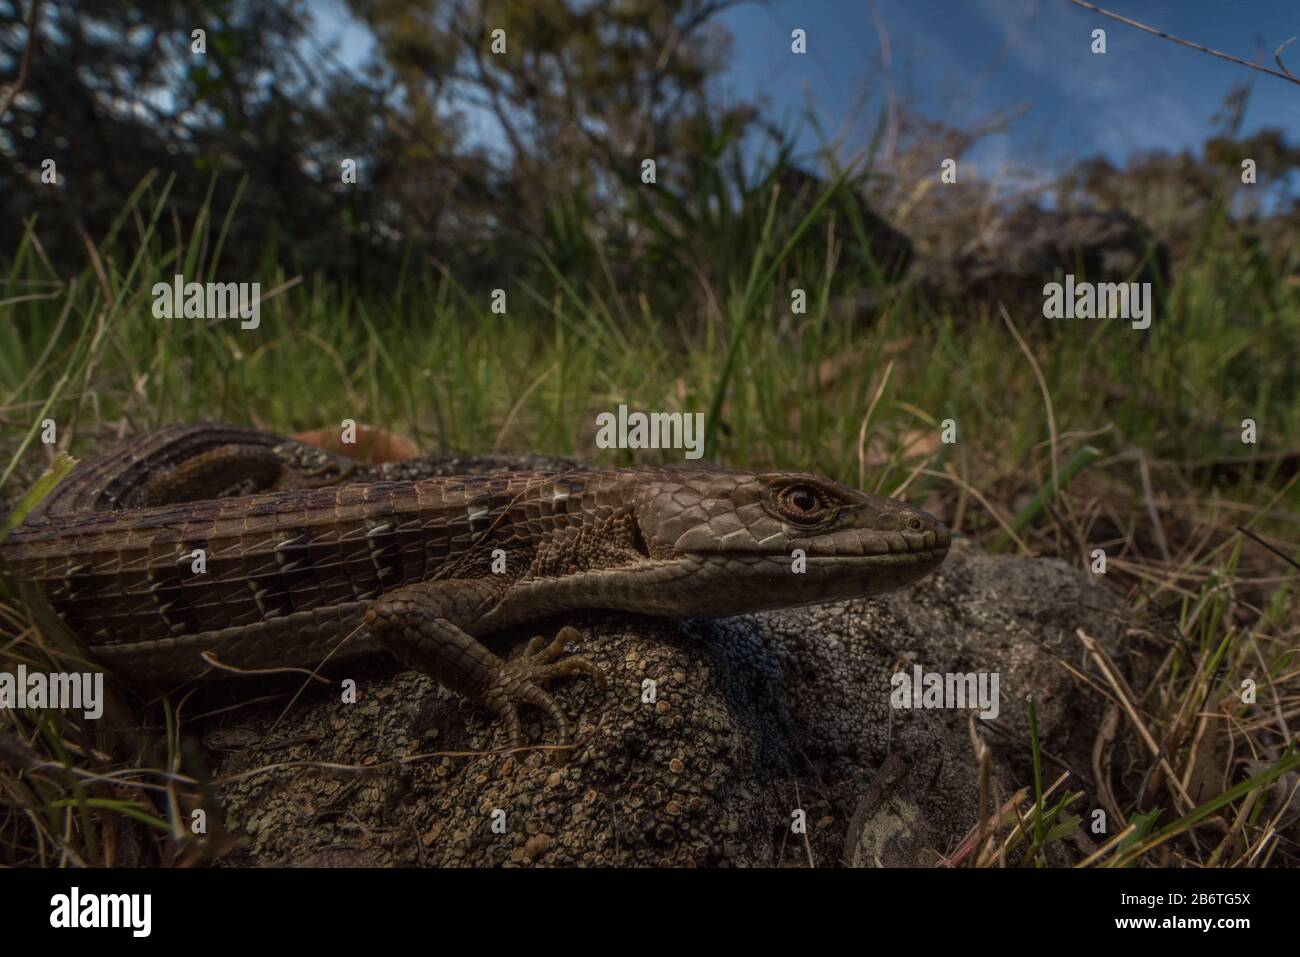 A Southern alligator lizard (Elgaria multicarinata), a species of lizard found in Western North America. Stock Photo